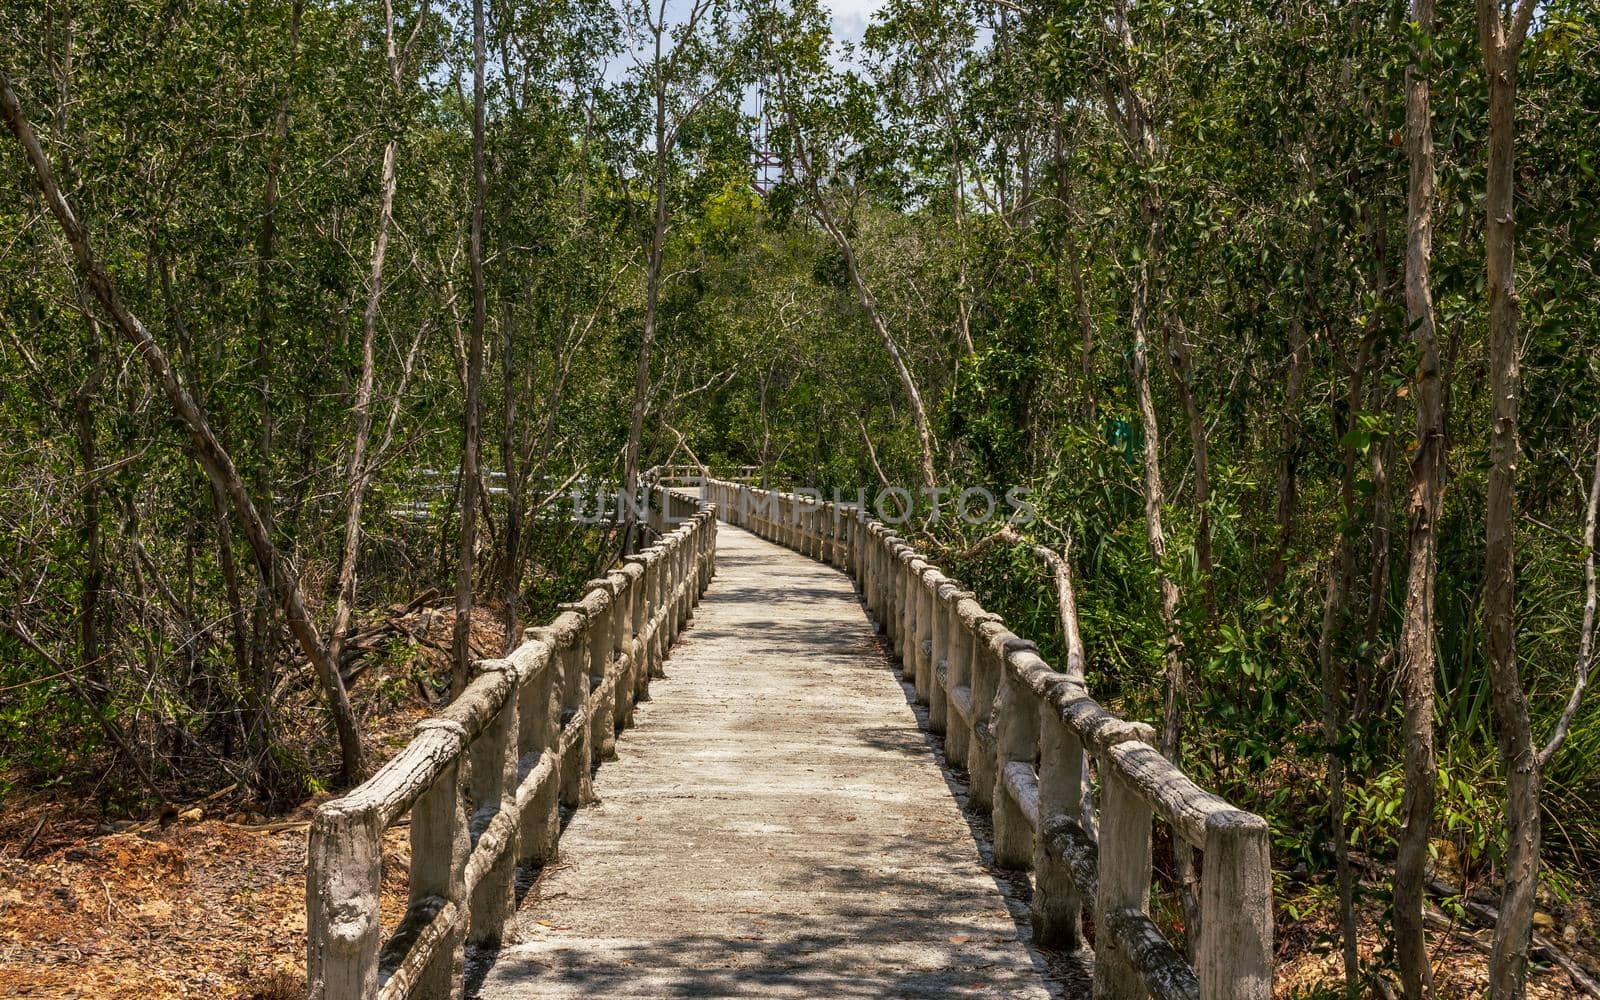 Thailand natural park, walking trail made of wood